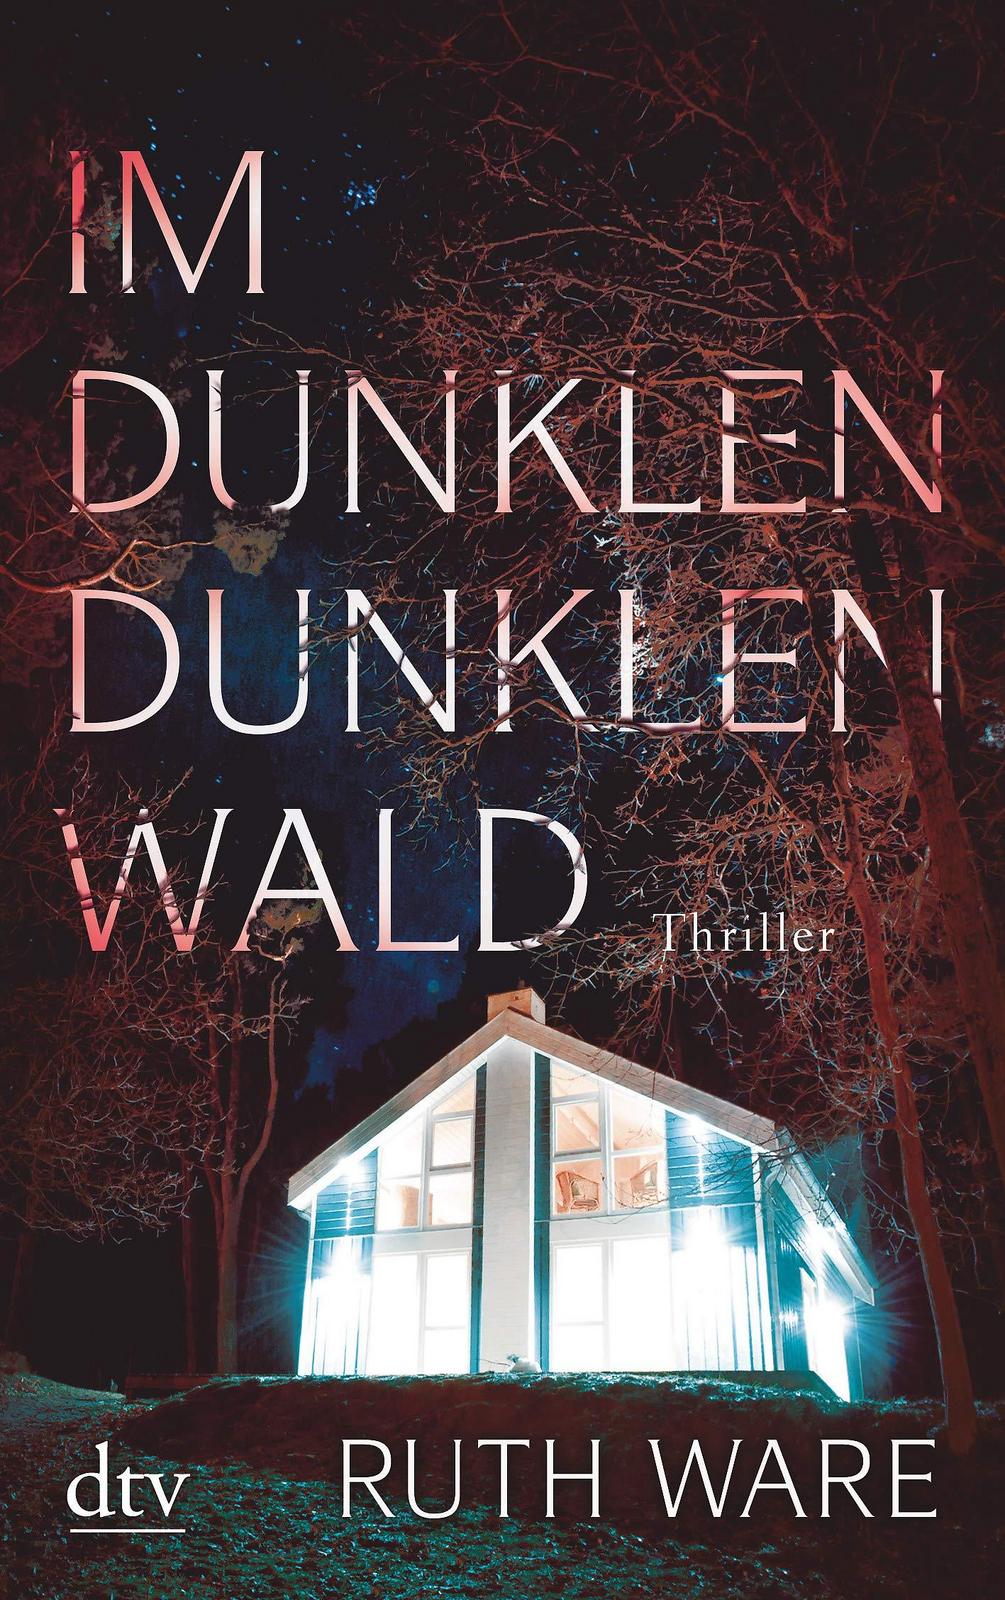 Ruth Ware: Im dunklen, dunklen Wald (German language, 2018, dtv Verlagsgesellschaft)